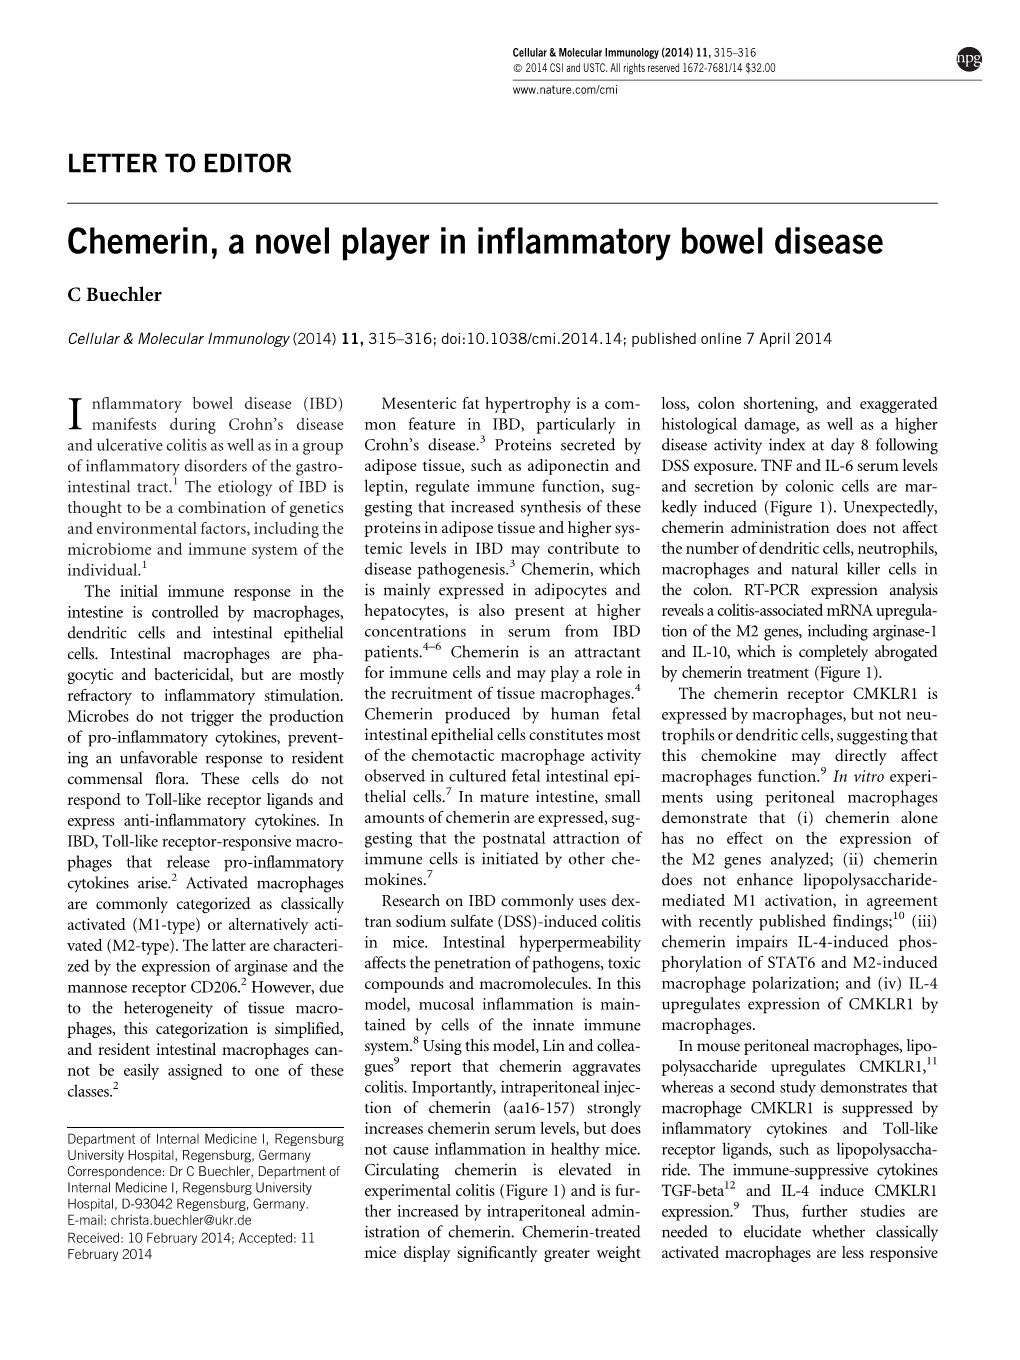 Chemerin, a Novel Player in Inflammatory Bowel Disease